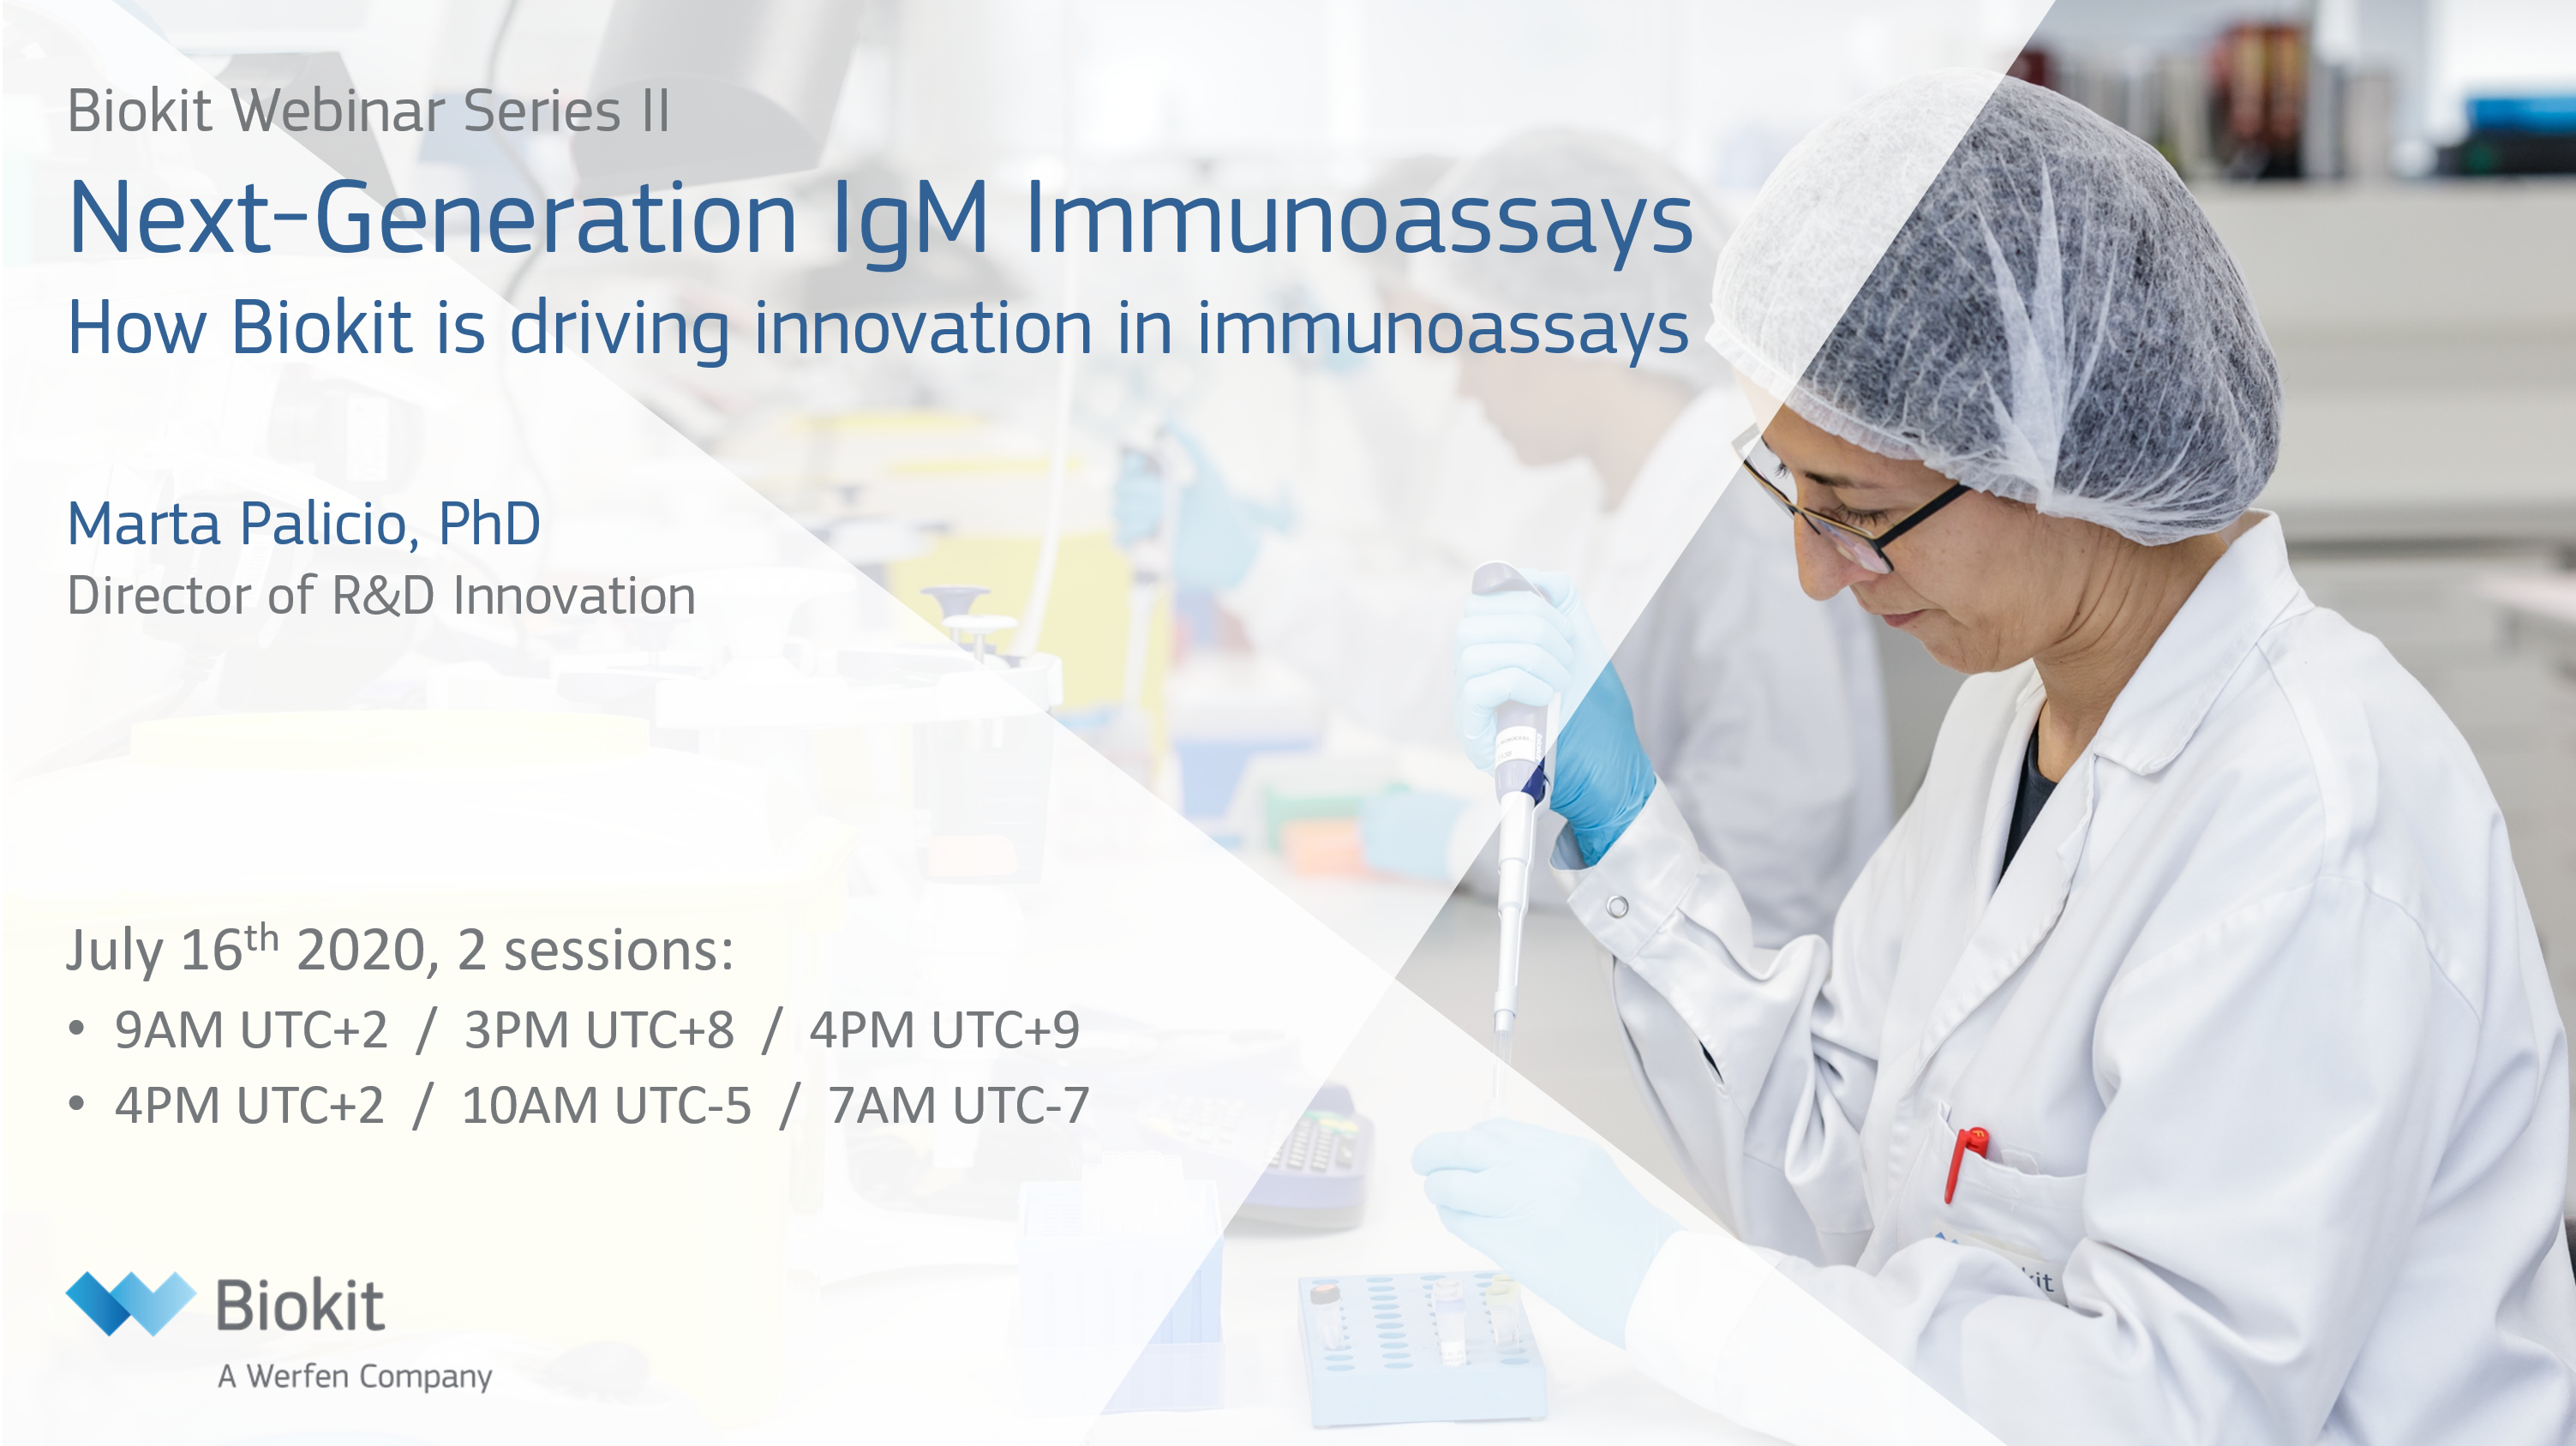 Webinar details: Next-Generation IgM Immunoassays